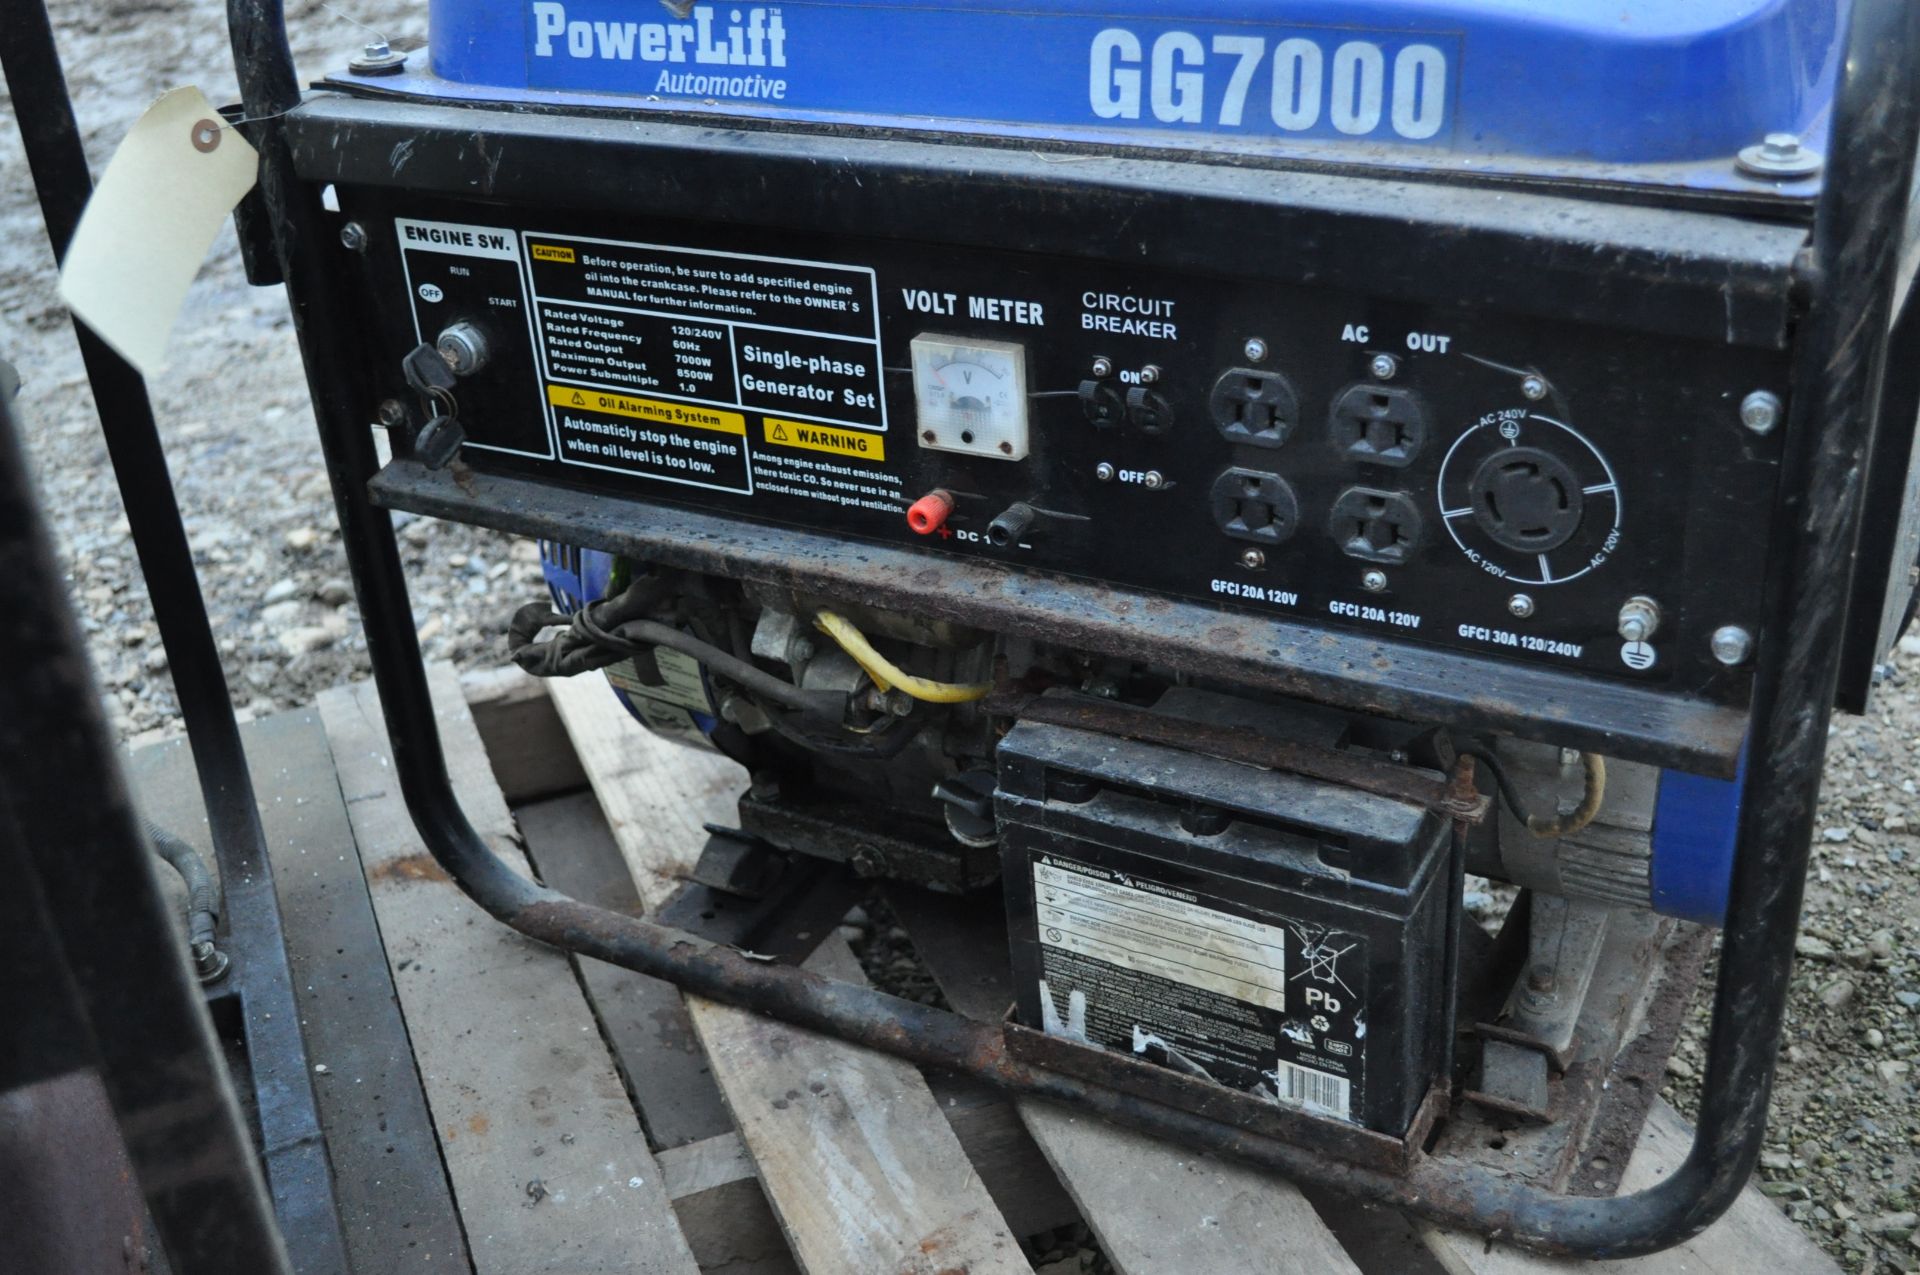 power lift gg7000 generator - Image 3 of 3